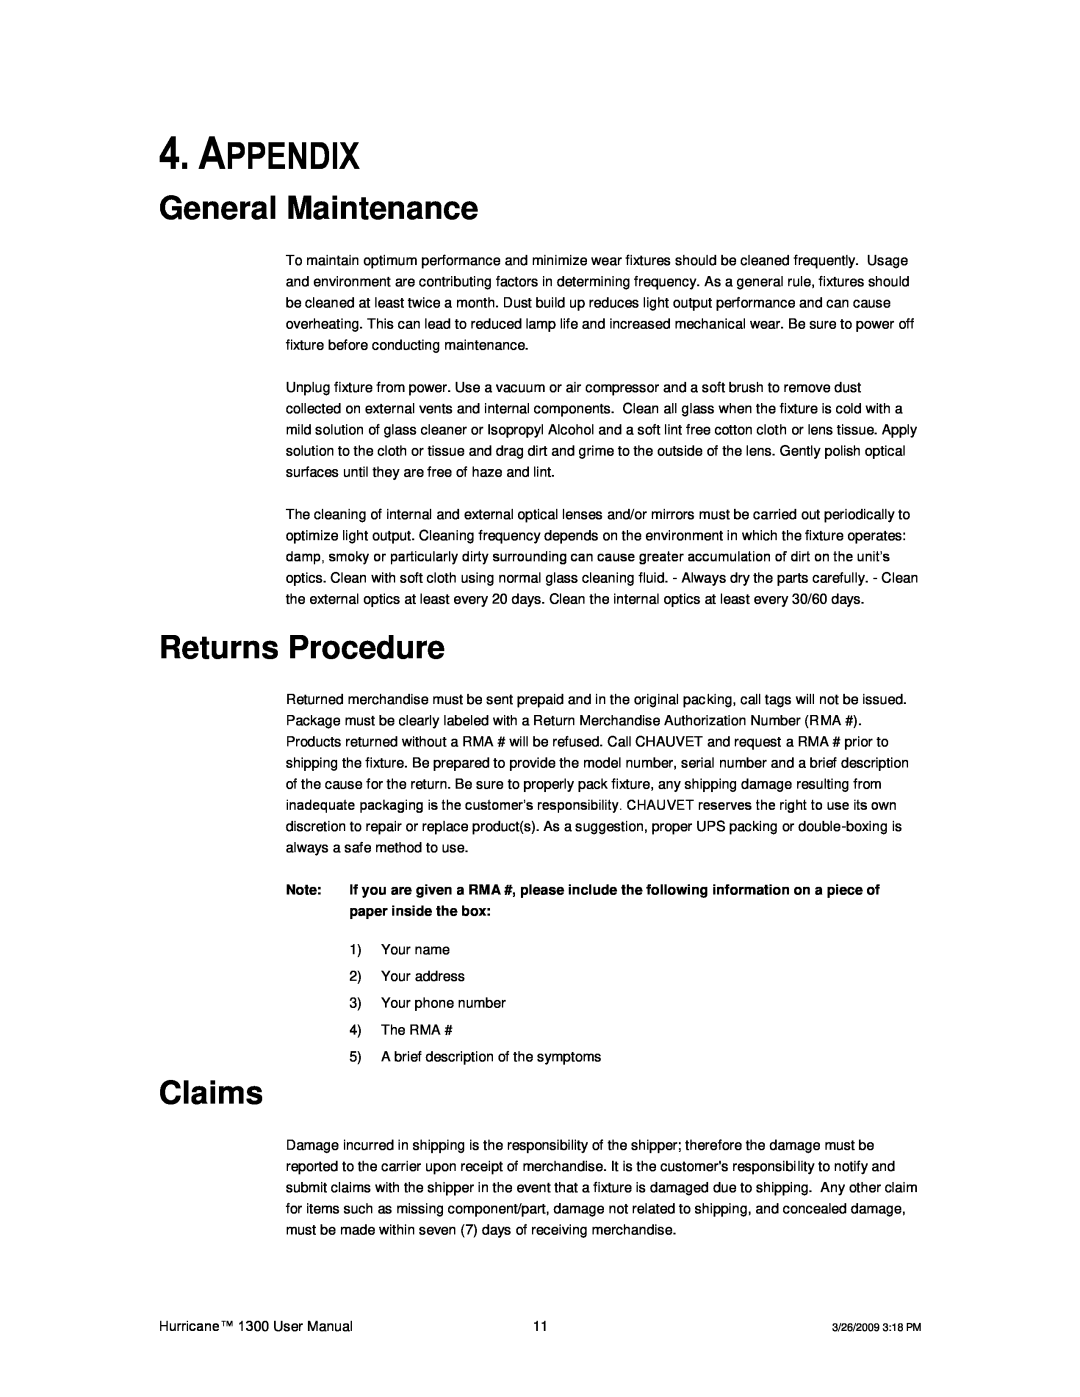 Chauvet Hurricane 1300 user manual Appendix, General Maintenance, Returns Procedure, Claims, paper inside the box 